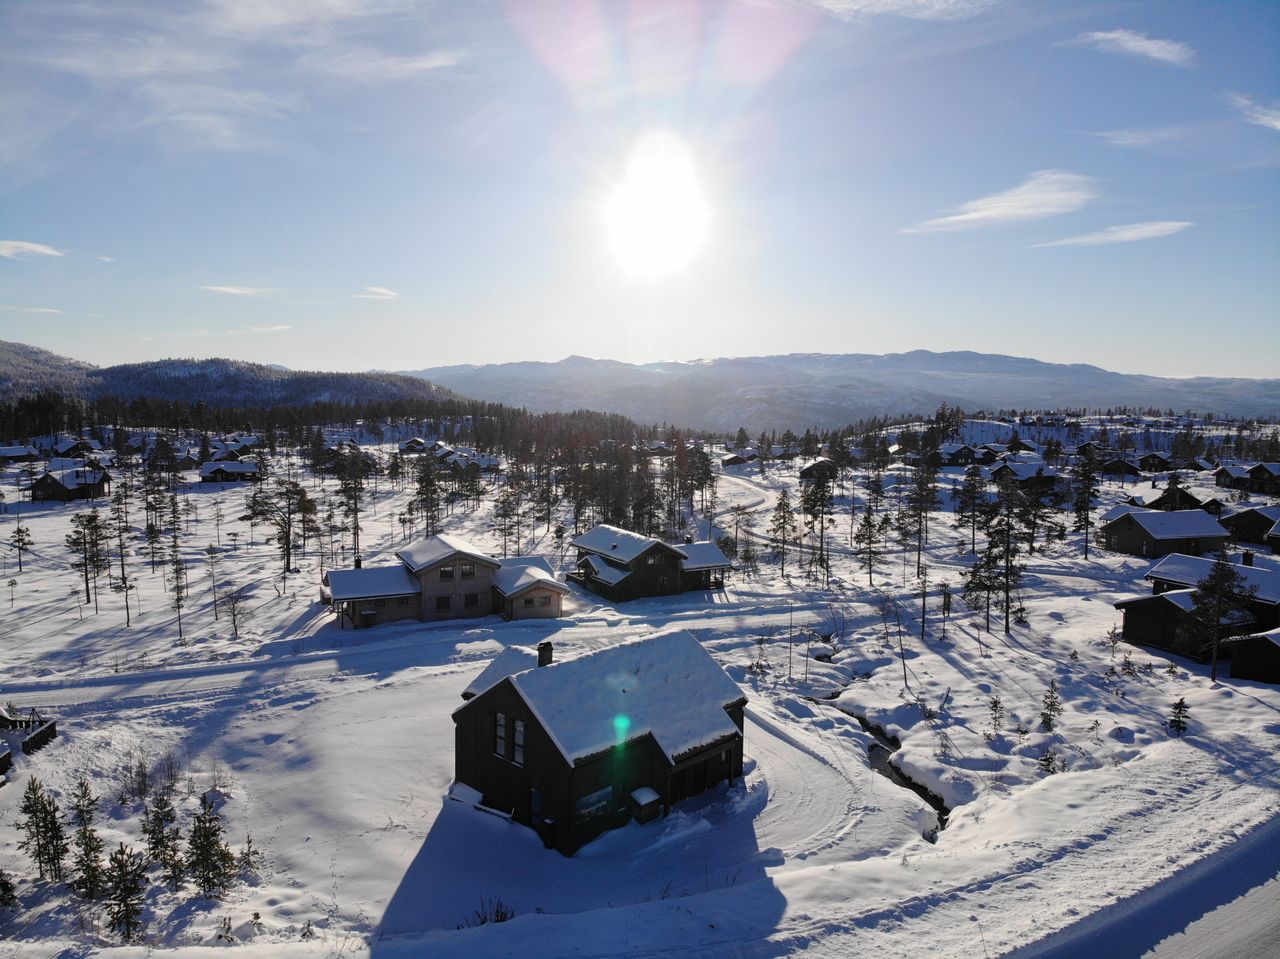 Innflytningsklar, helt ny møblert hytte med ski in/out alpin og langrenn! Under 2 timer fra Oslo!